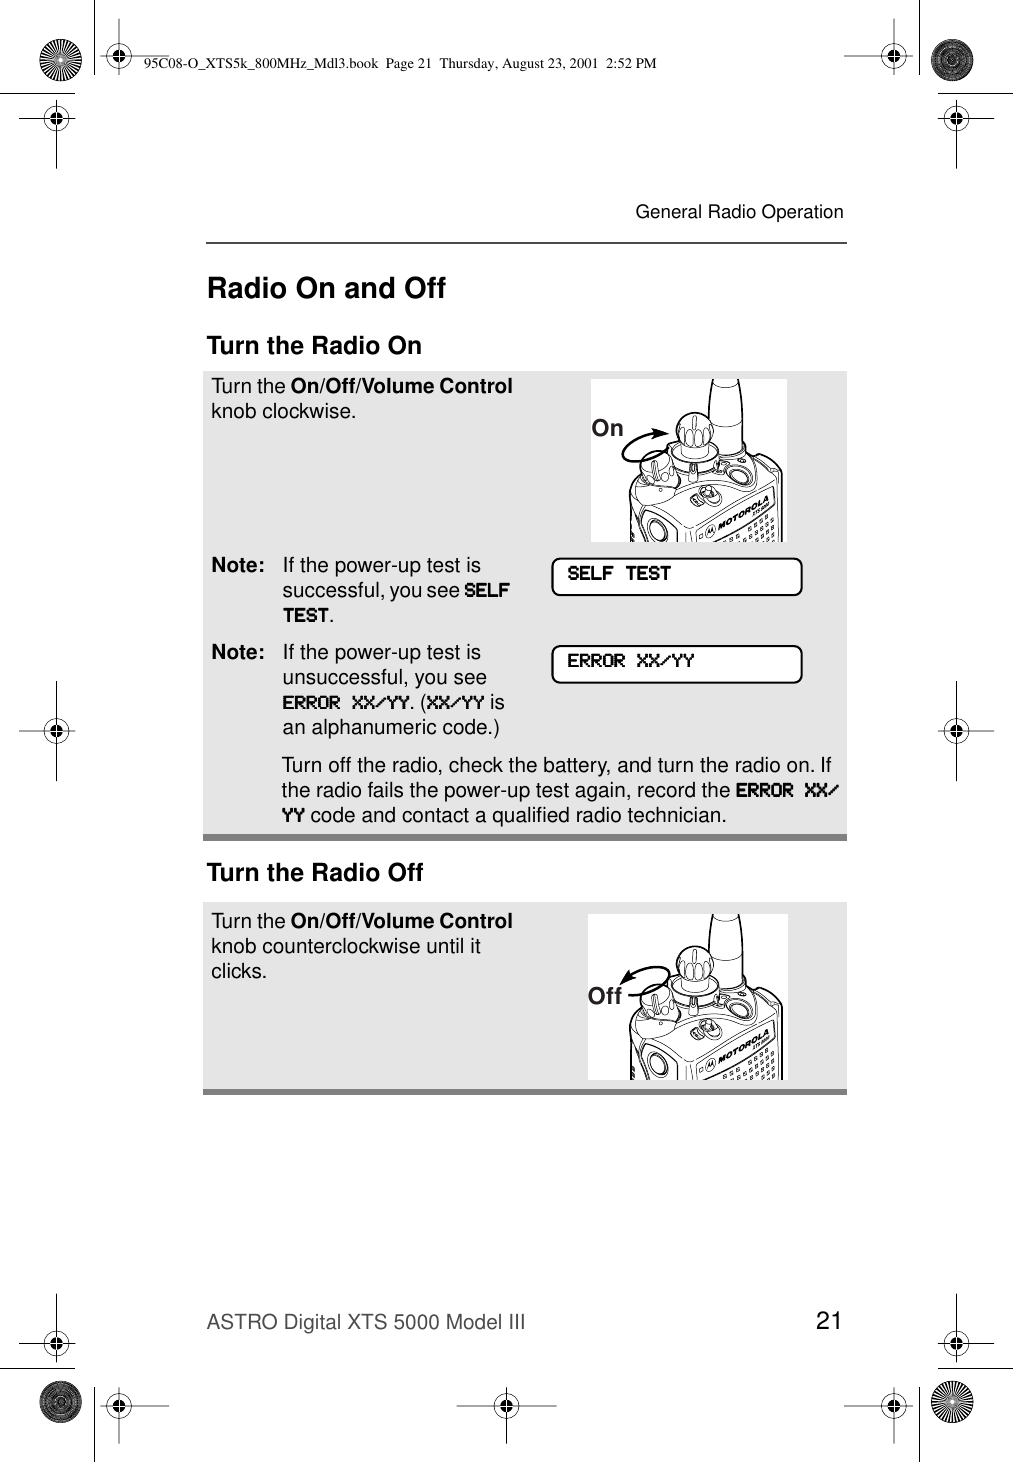 ASTRO Digital XTS 5000 Model III 21General Radio OperationRadio On and OffTurn the Radio OnTurn the Radio OffTurn the On/Off/Volume Control knob clockwise.Note: If the power-up test is successful, you see SSSSEEEELLLLFFFF    TTTTEEEESSSSTTTT.Note: If the power-up test is unsuccessful, you see EEEERRRRRRRROOOORRRR    XXXXXXXX////YYYYYYYY. (XXXXXXXX////YYYYYYYY is an alphanumeric code.) Turn off the radio, check the battery, and turn the radio on. If the radio fails the power-up test again, record the EEEERRRRRRRROOOORRRR    XXXXXXXX////YYYYYYYY code and contact a qualiﬁed radio technician.Turn the On/Off/Volume Control knob counterclockwise until it clicks.OnSSSSEEEELLLLFFFF    TTTTEEEESSSSTTTTEEEERRRRRRRROOOORRRR    XXXXXXXX////YYYYYYYYOff95C08-O_XTS5k_800MHz_Mdl3.book  Page 21  Thursday, August 23, 2001  2:52 PM